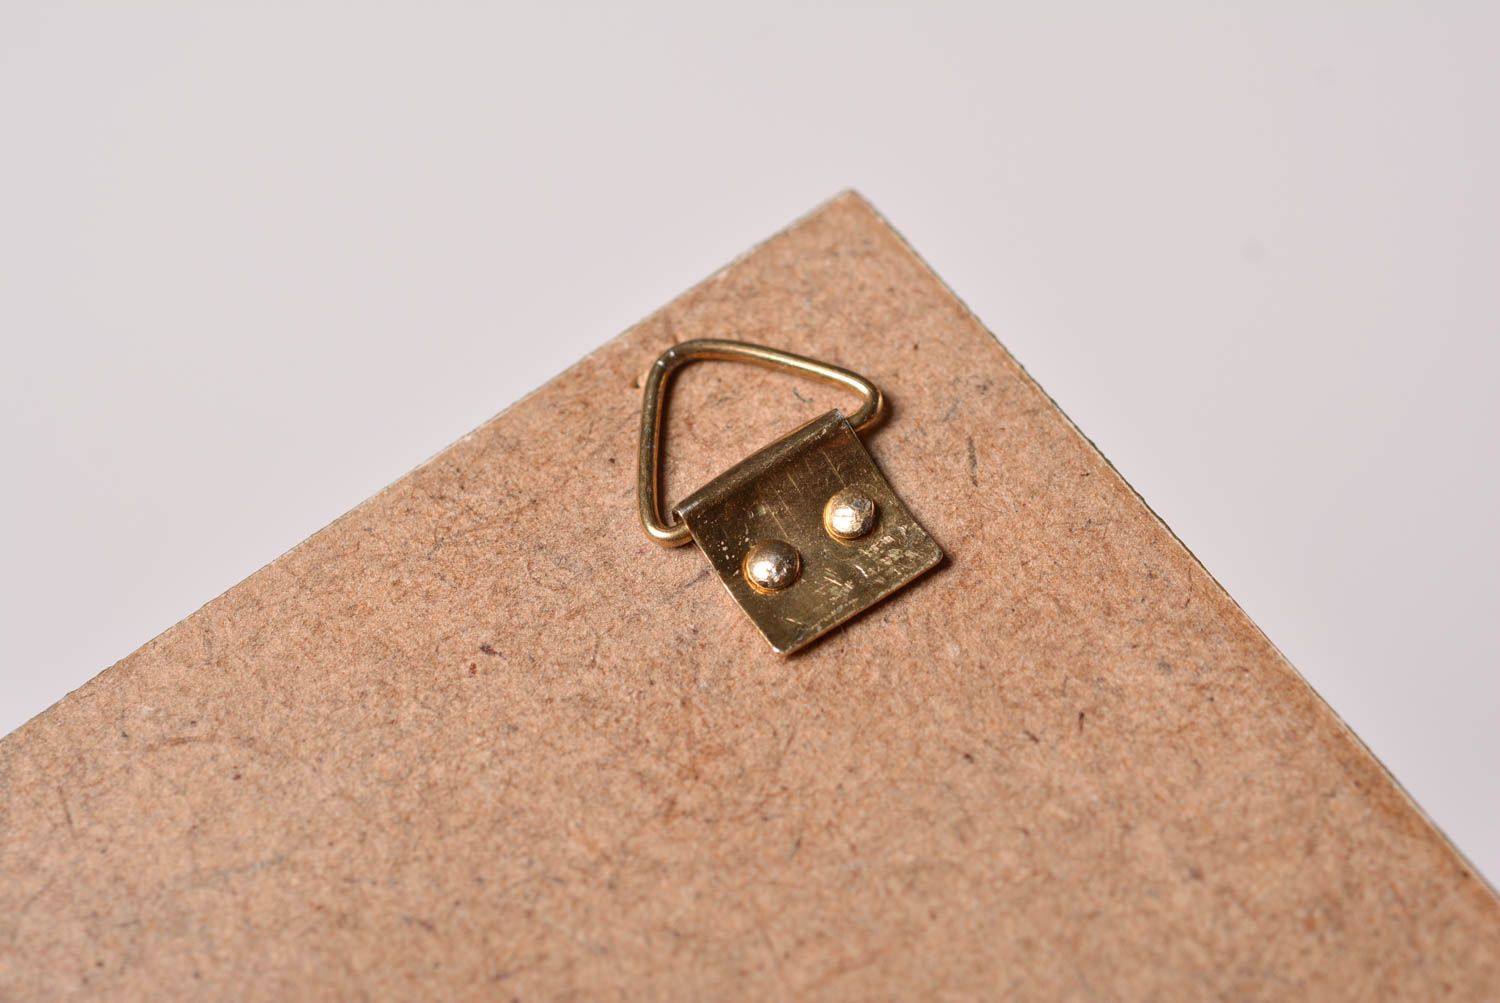 Square wall handmade key holder made of MDF with decoupage home decor ideas photo 3